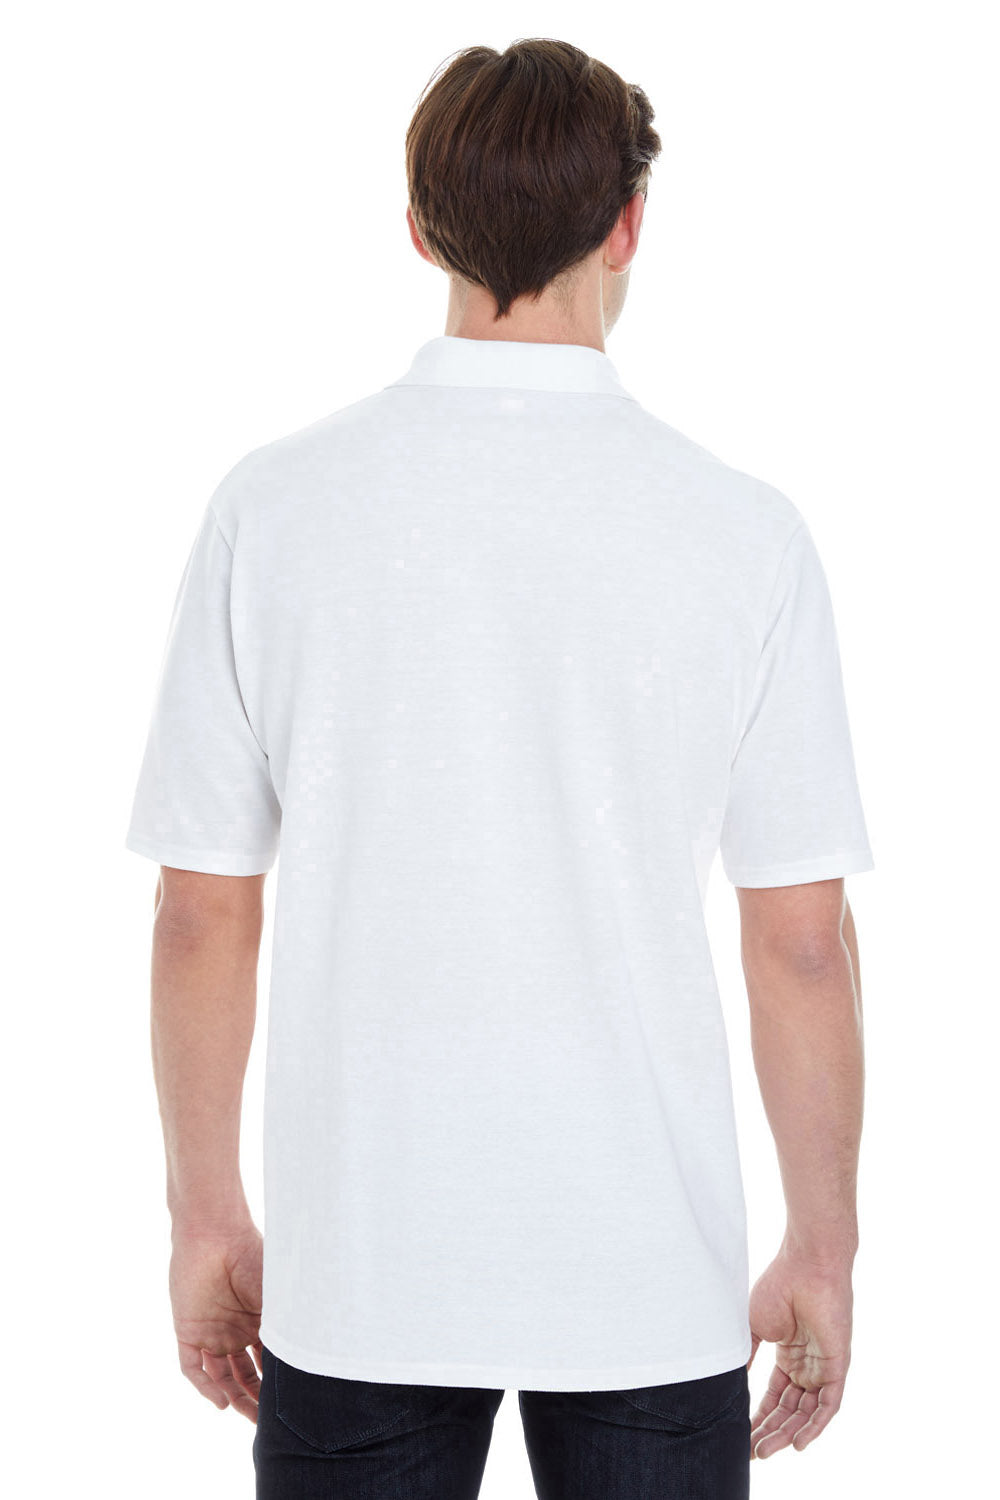 Hanes 055P Mens X-Temp Fresh IQ Moisture Wicking Short Sleeve Polo Shirt White Back